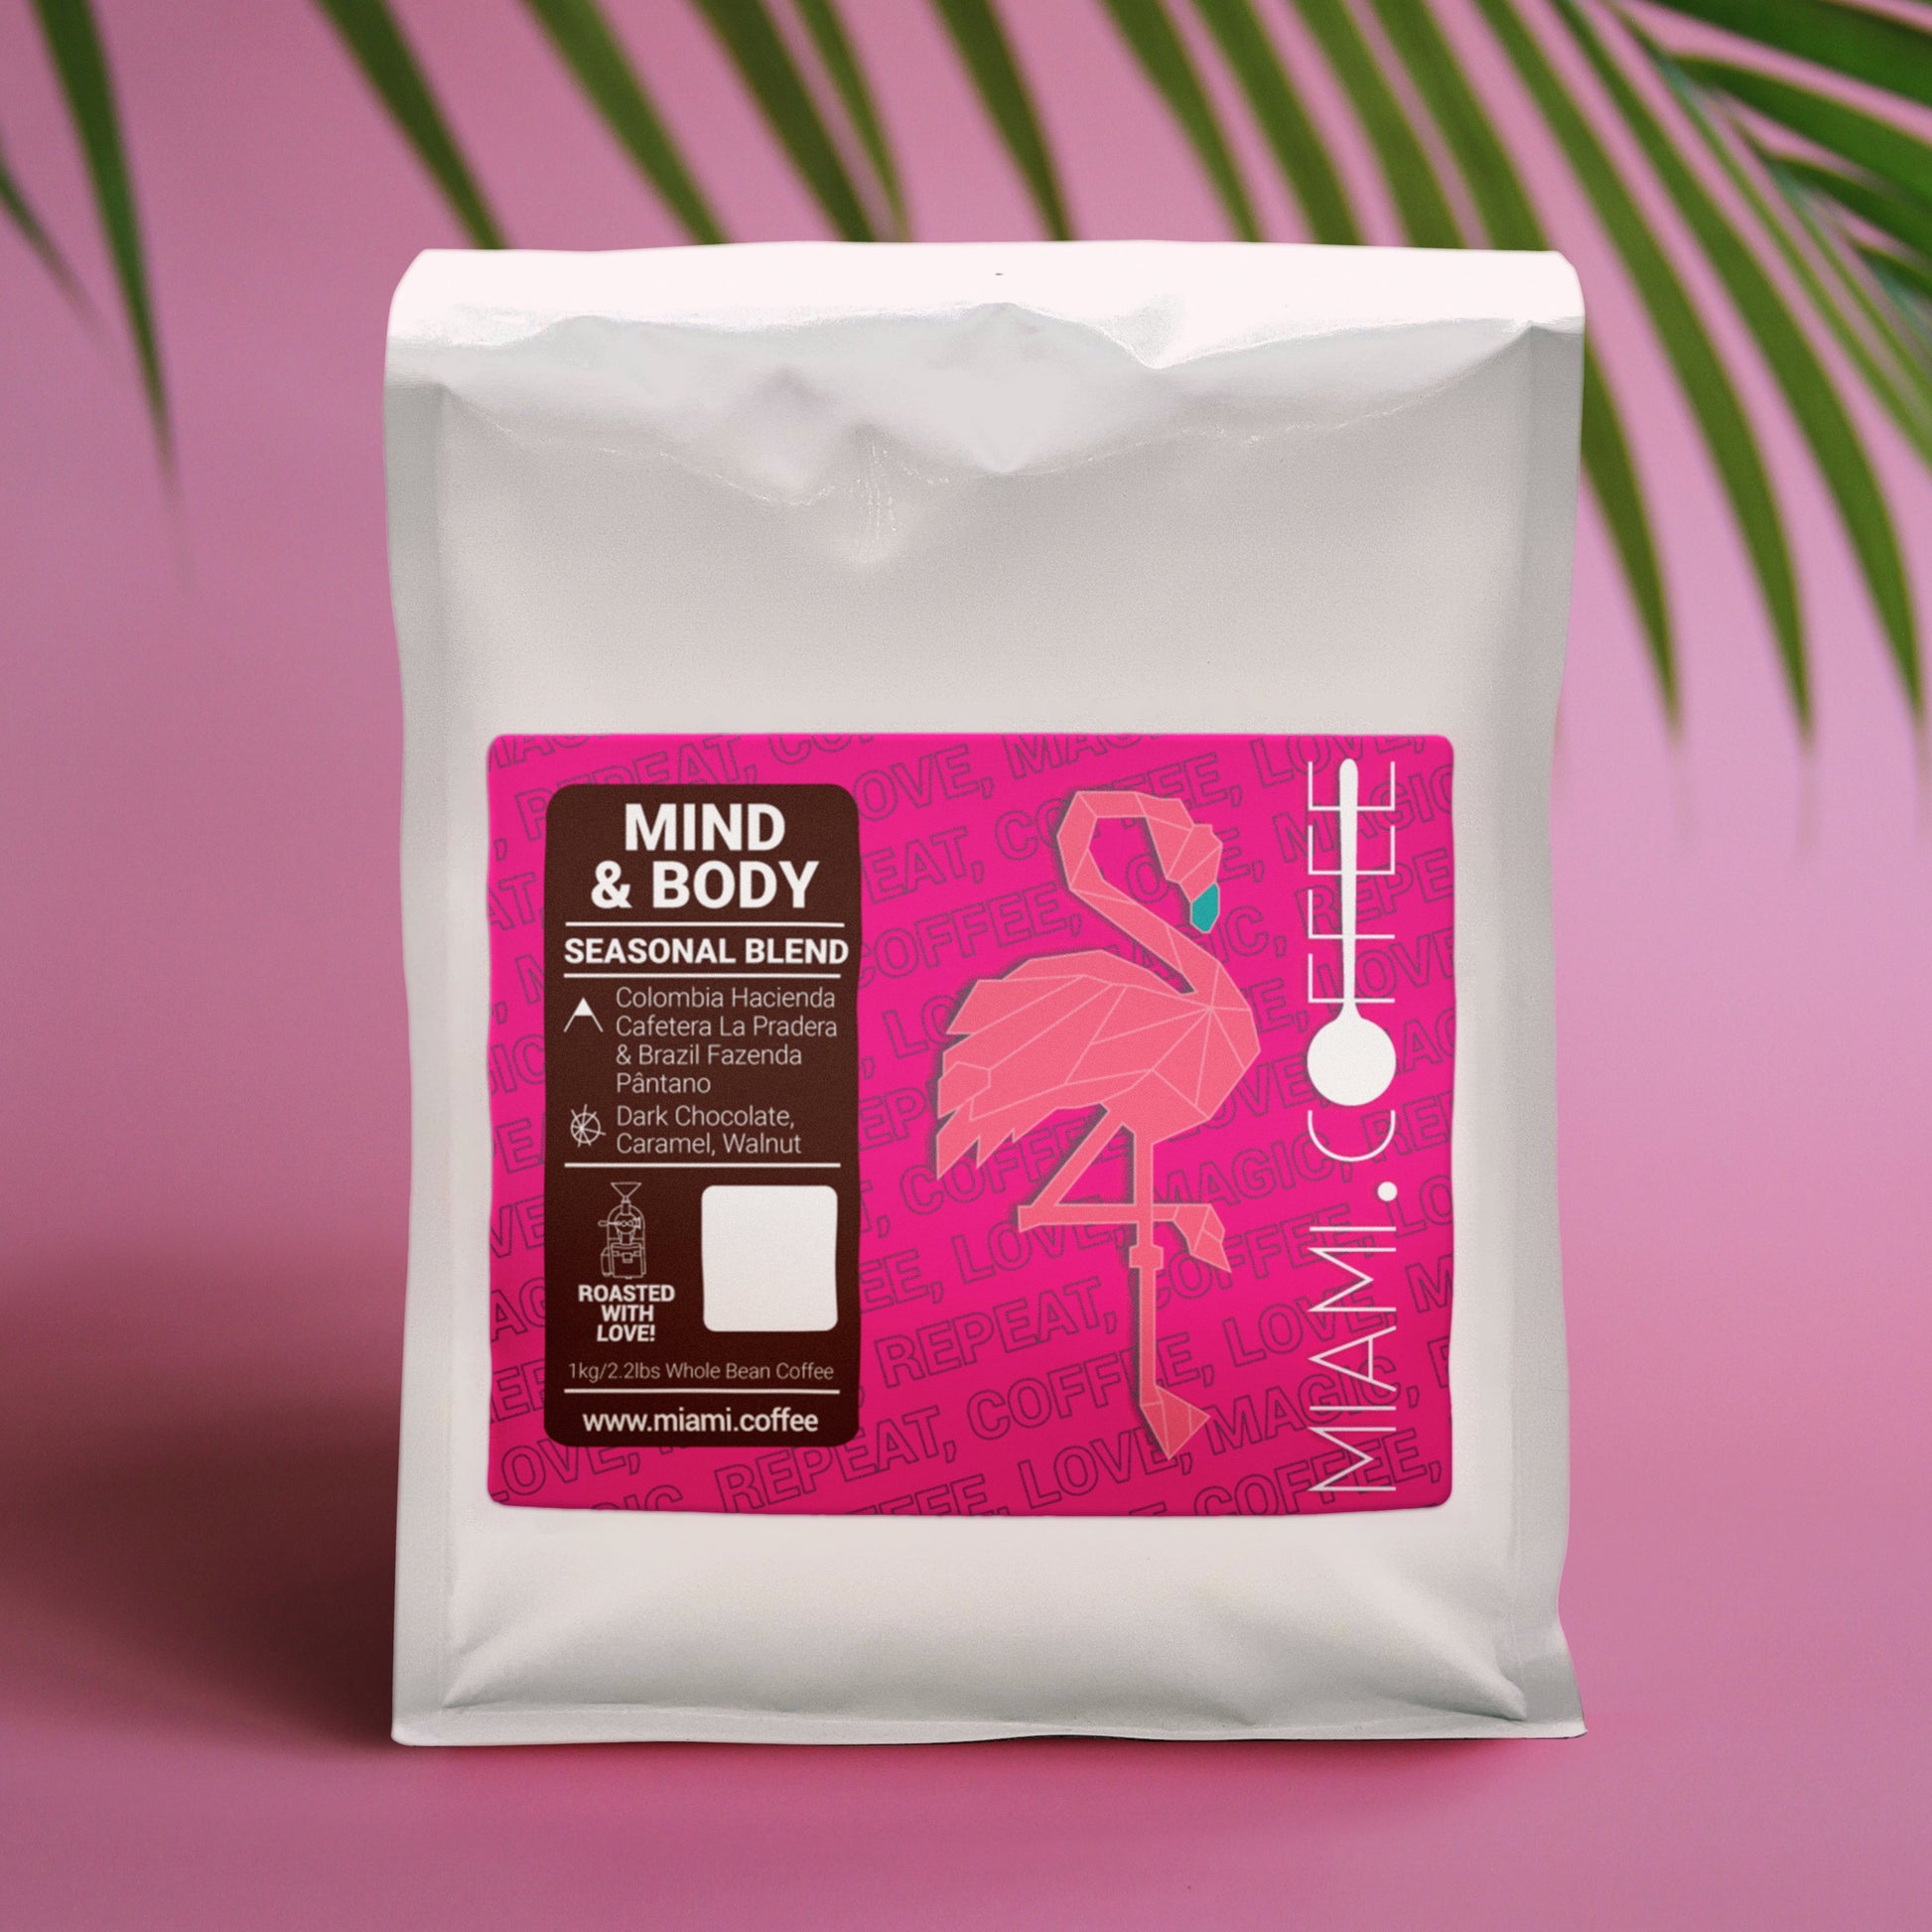 Mind & Body Blend by Miami dot Coffee 1 Kilogram bag. Flavor descriptors: Dark Chocolate, Caramel, Walnut